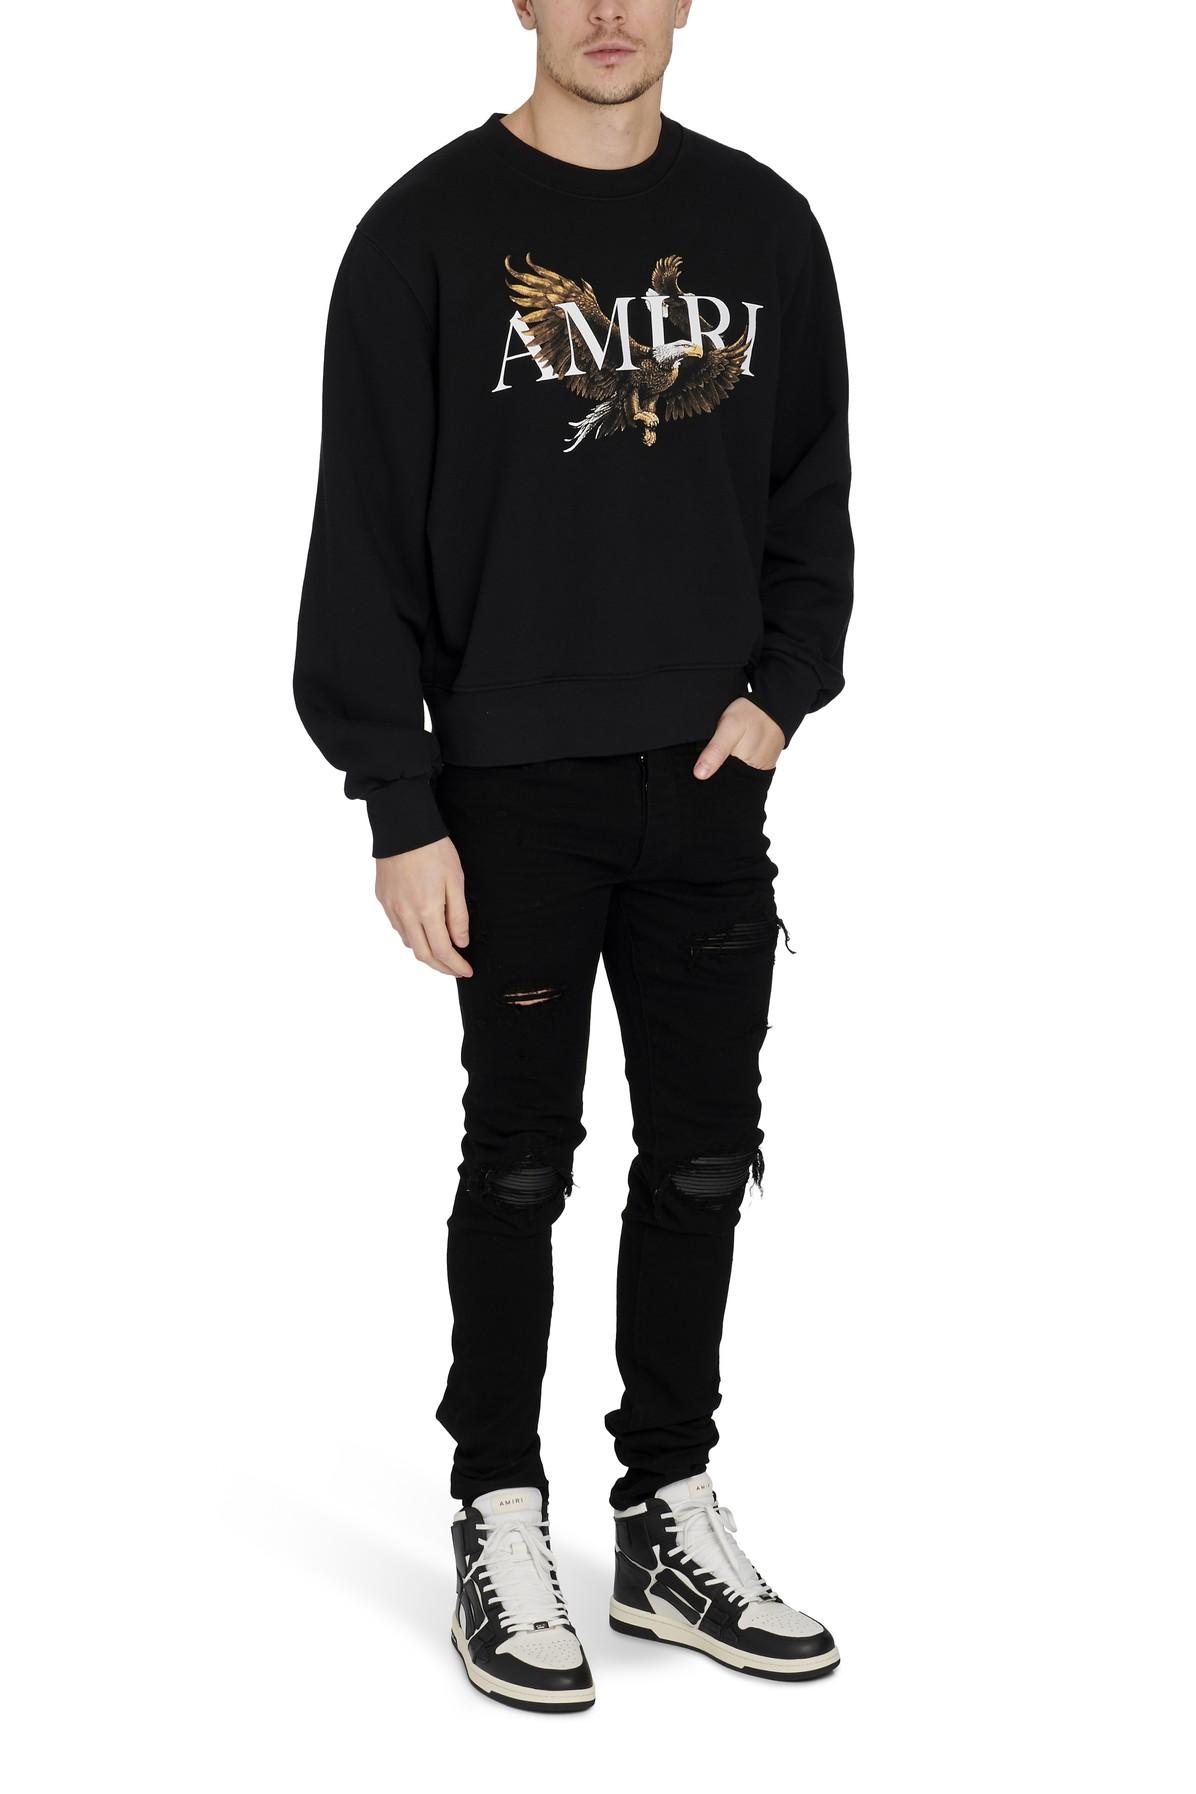 Amiri Denim Mx1 Jeans in Black for Men - Lyst